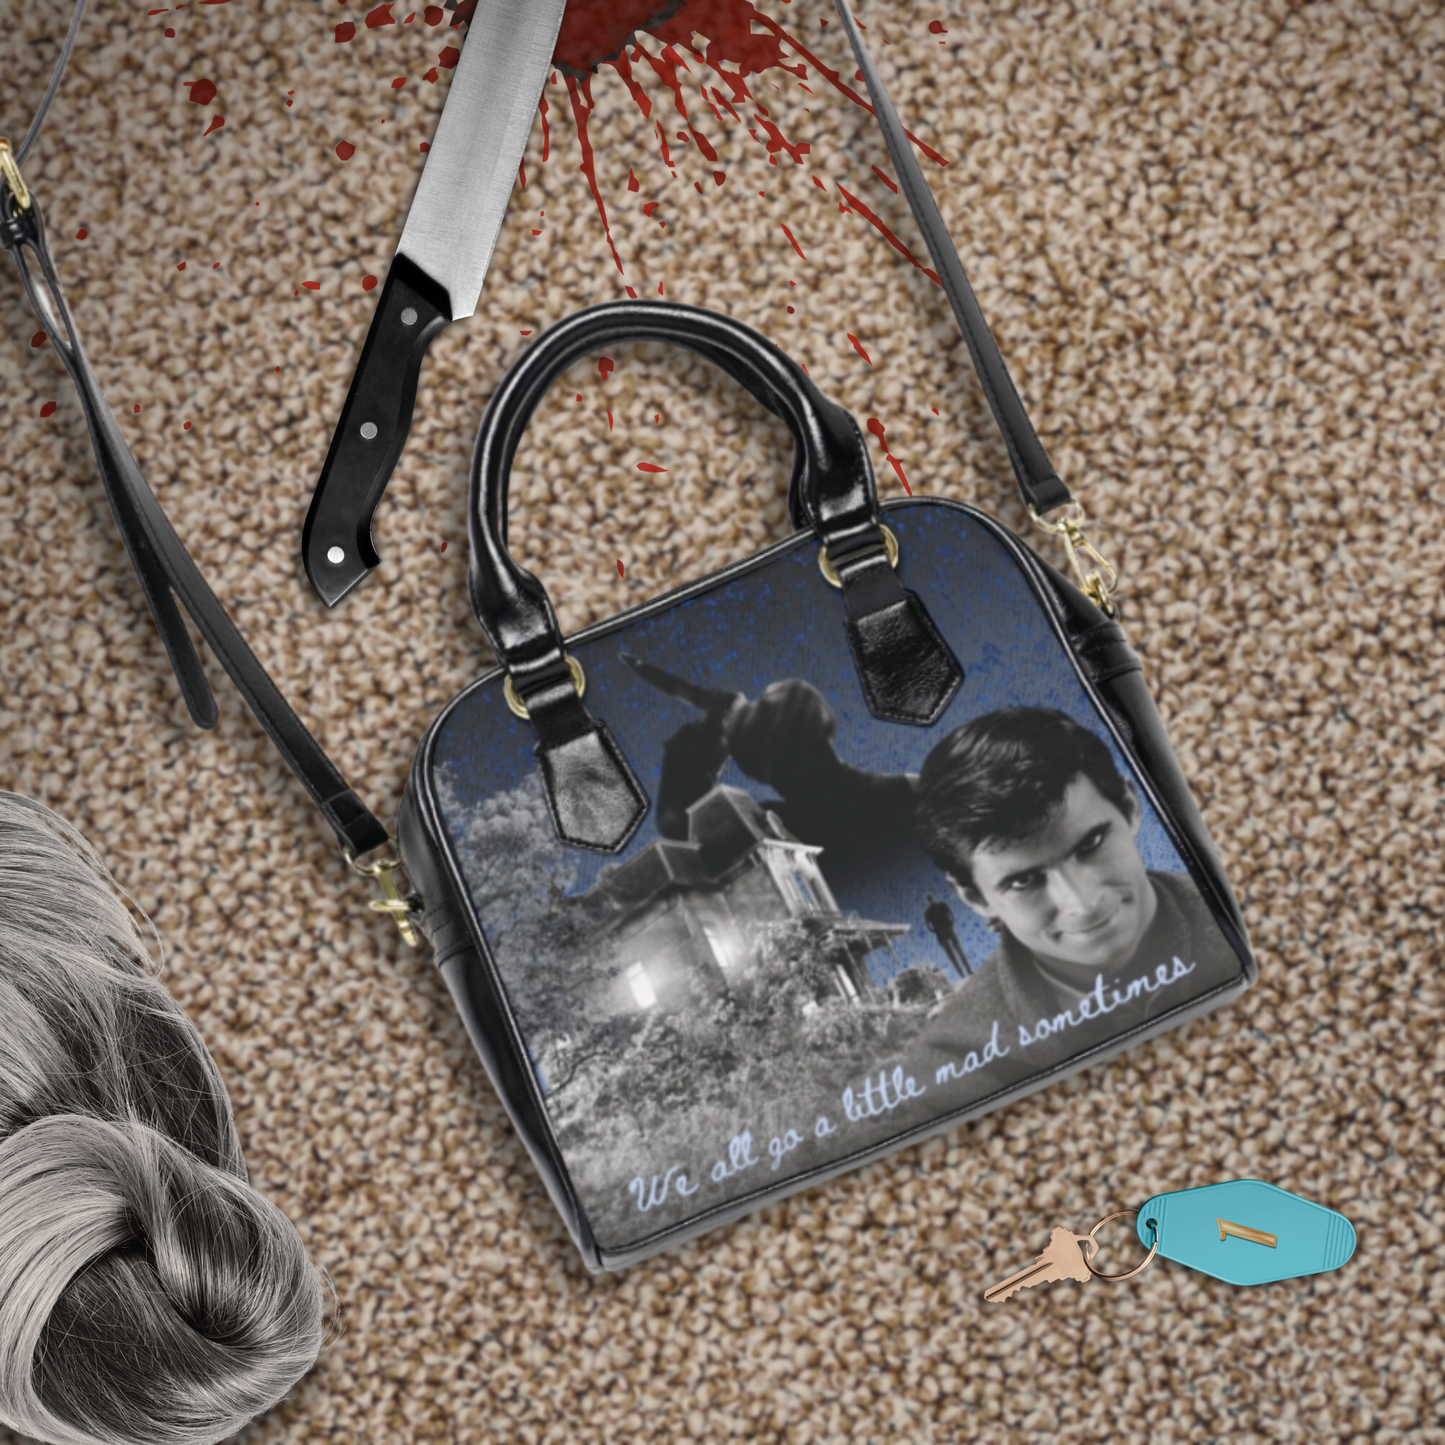 Norman handbag Psycho purse horror movie fan gift for her horror crossbody bag classic horror handbag gift Horror shoulder bag birthday gift